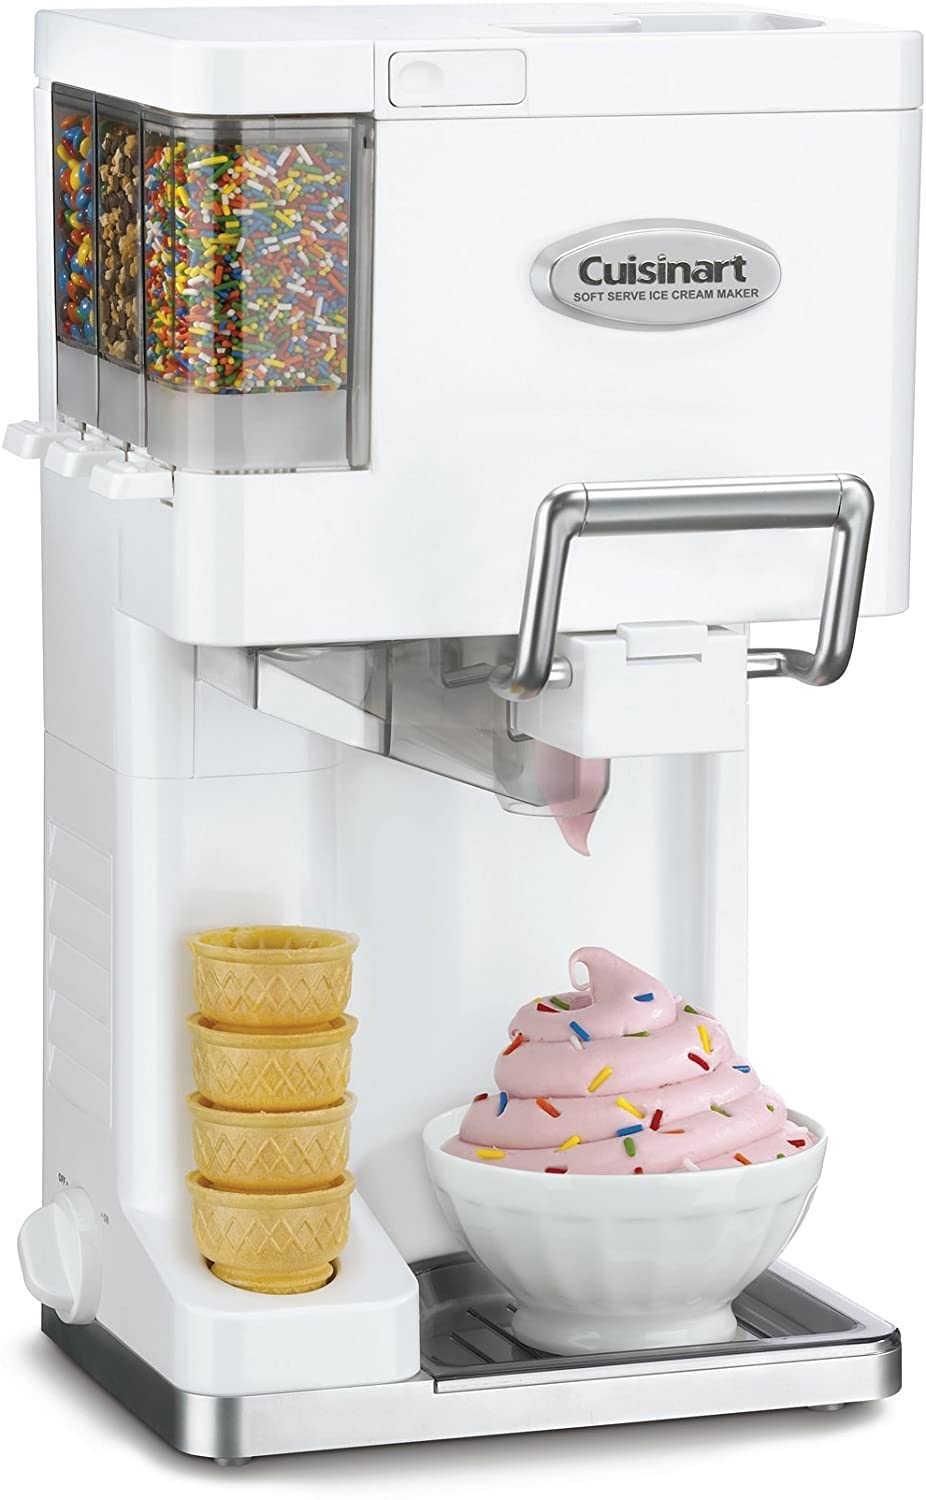 Cuisinart ICE-45 混合软冰淇淋 1-1/2 夸脱冰淇淋机